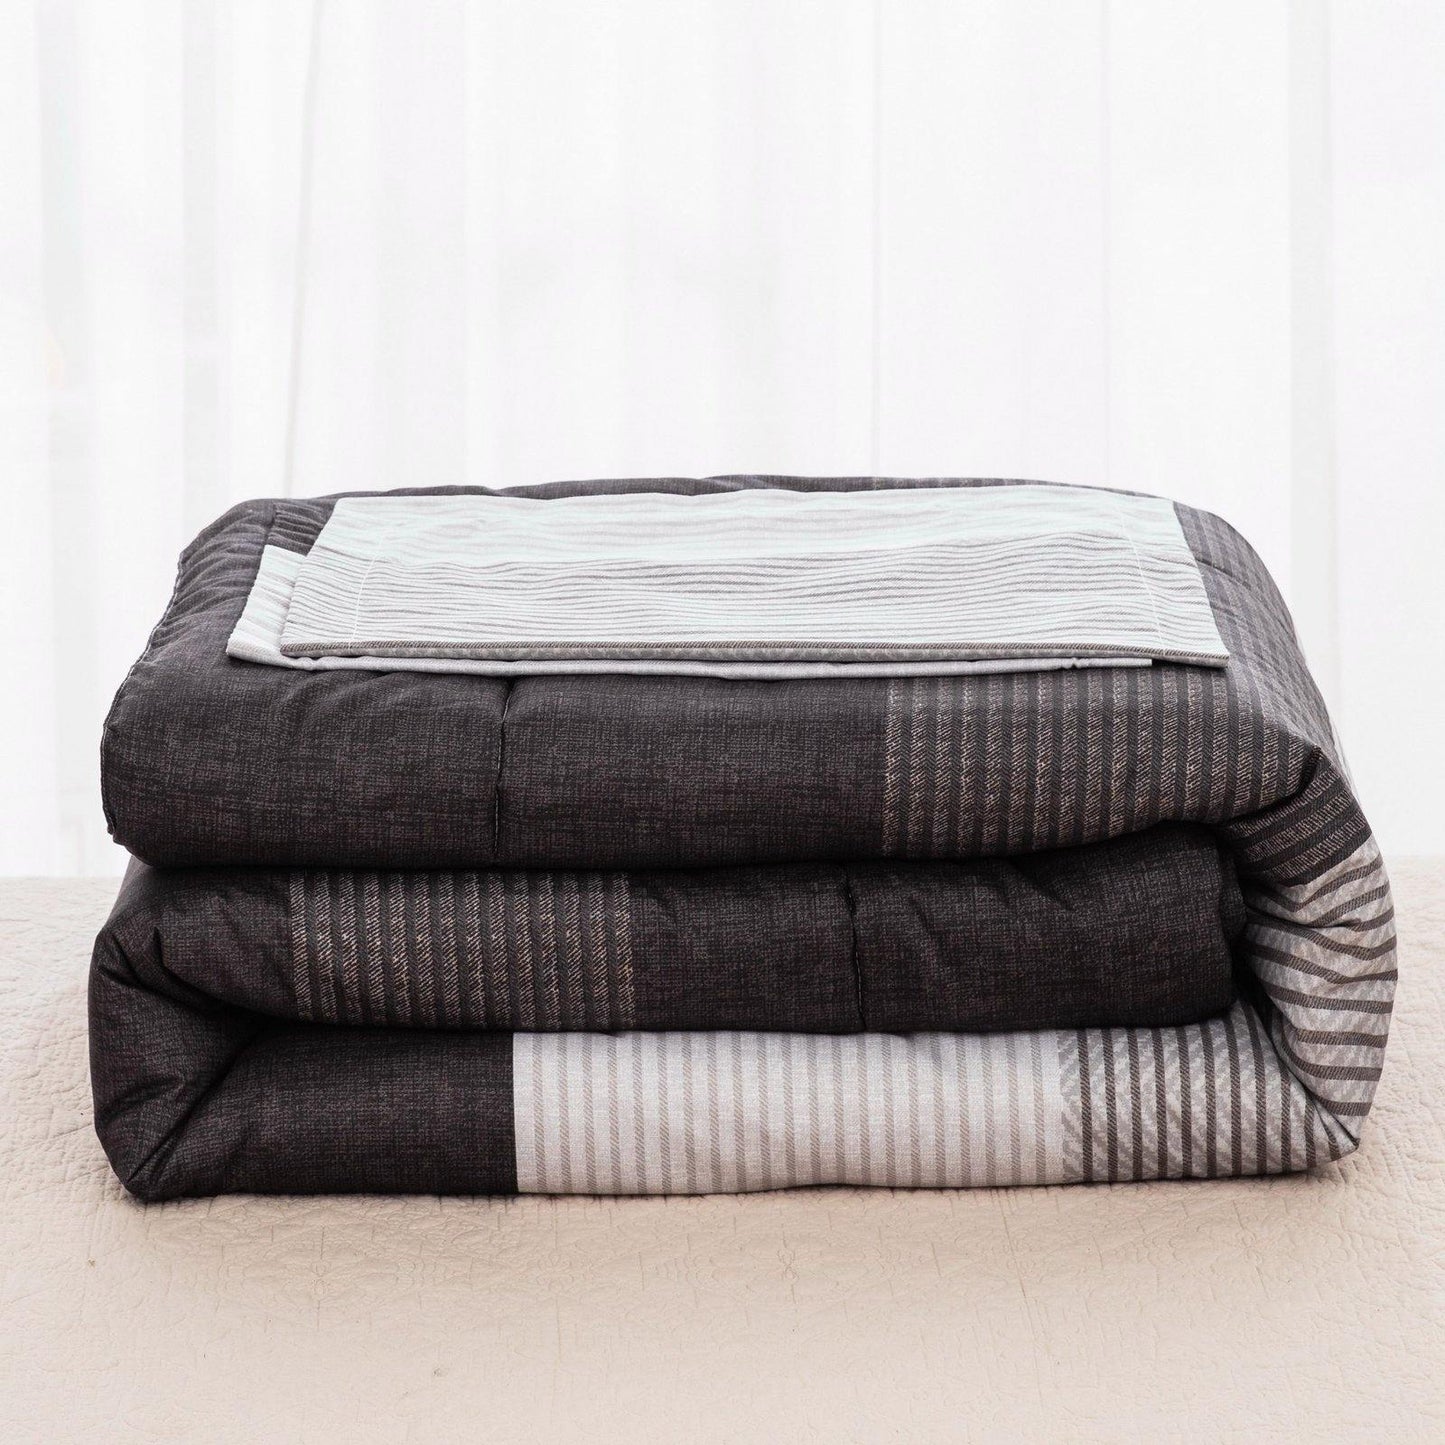 WONGS BEDDING black and white Comforter set 3 Pieces Bedding Comforter with 2 Pillow Cases - Wongs bedding